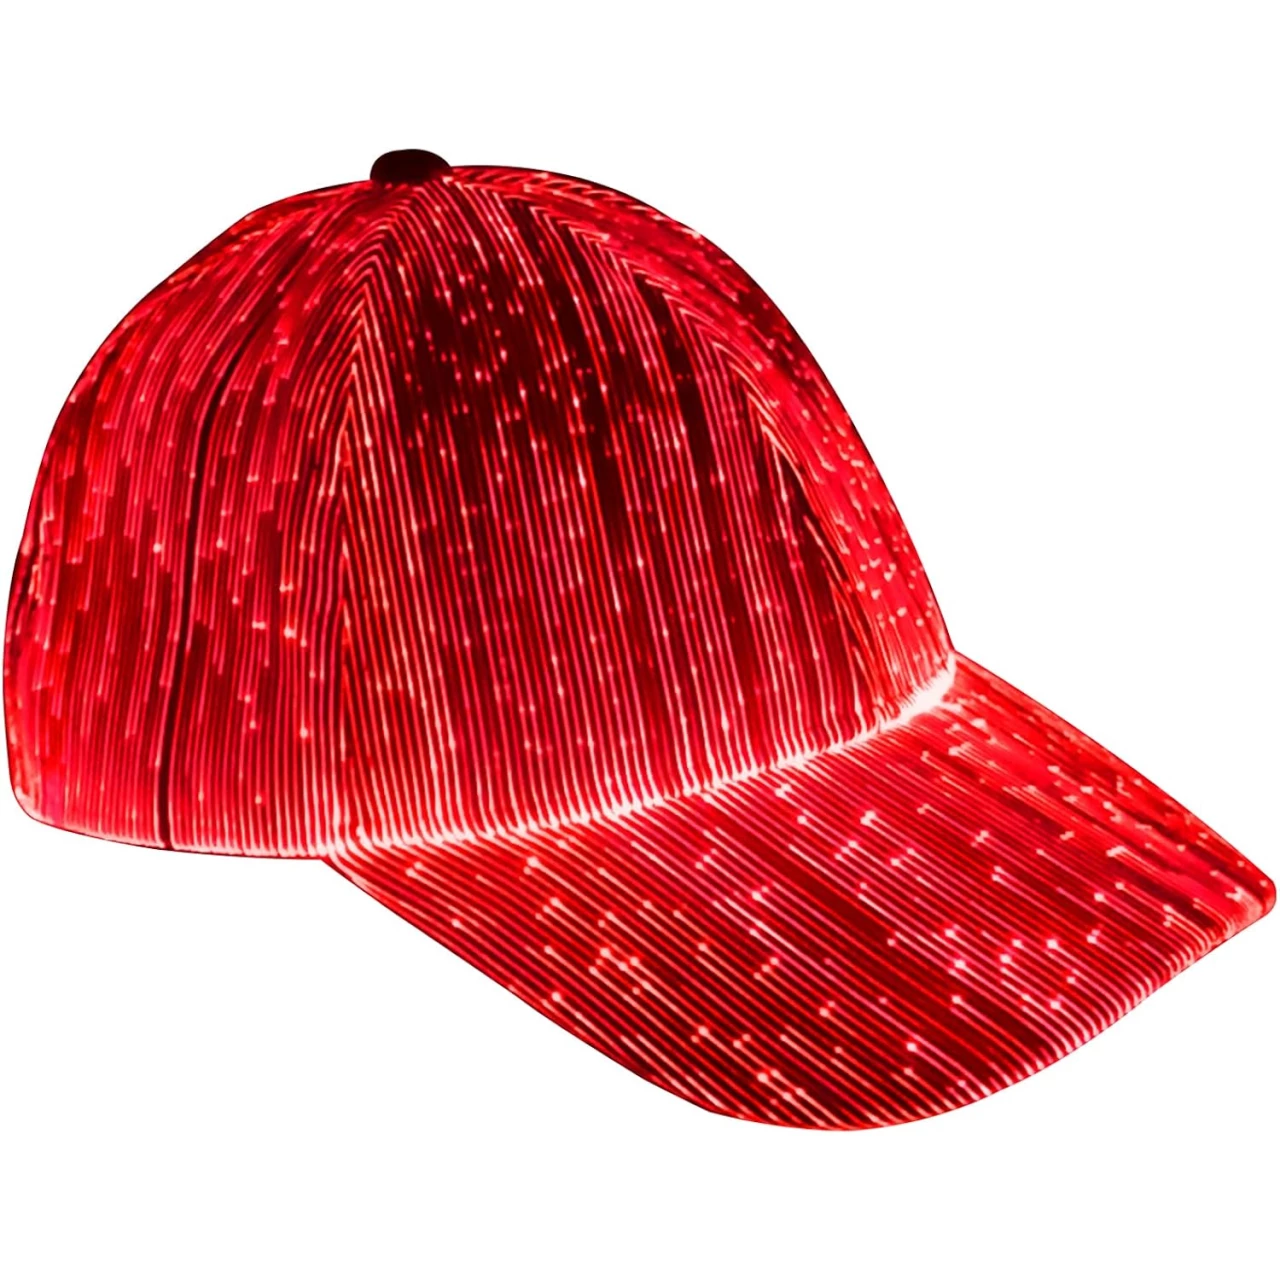 Ruconla Fiber Optic Cap LED hat with 7 Colors Luminous Glowing EDC Baseball Hats USB Charging Light up caps Even Party led Christmas Cap for Event Holiday Black